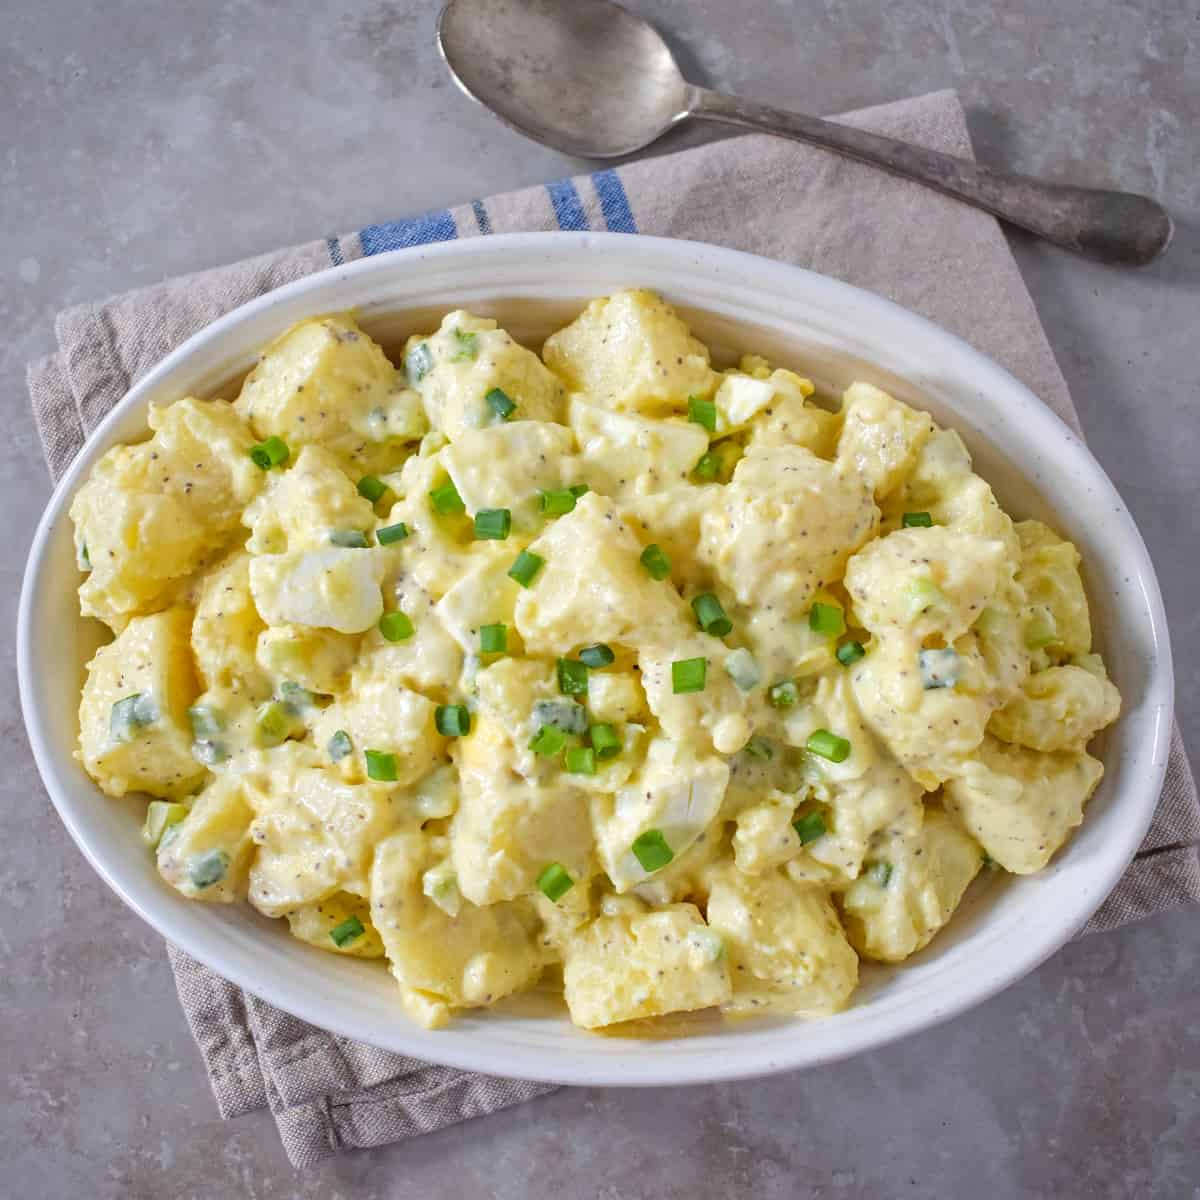 https://www.cook2eatwell.com/wp-content/uploads/2022/07/potato-egg-salad-image-1.jpg